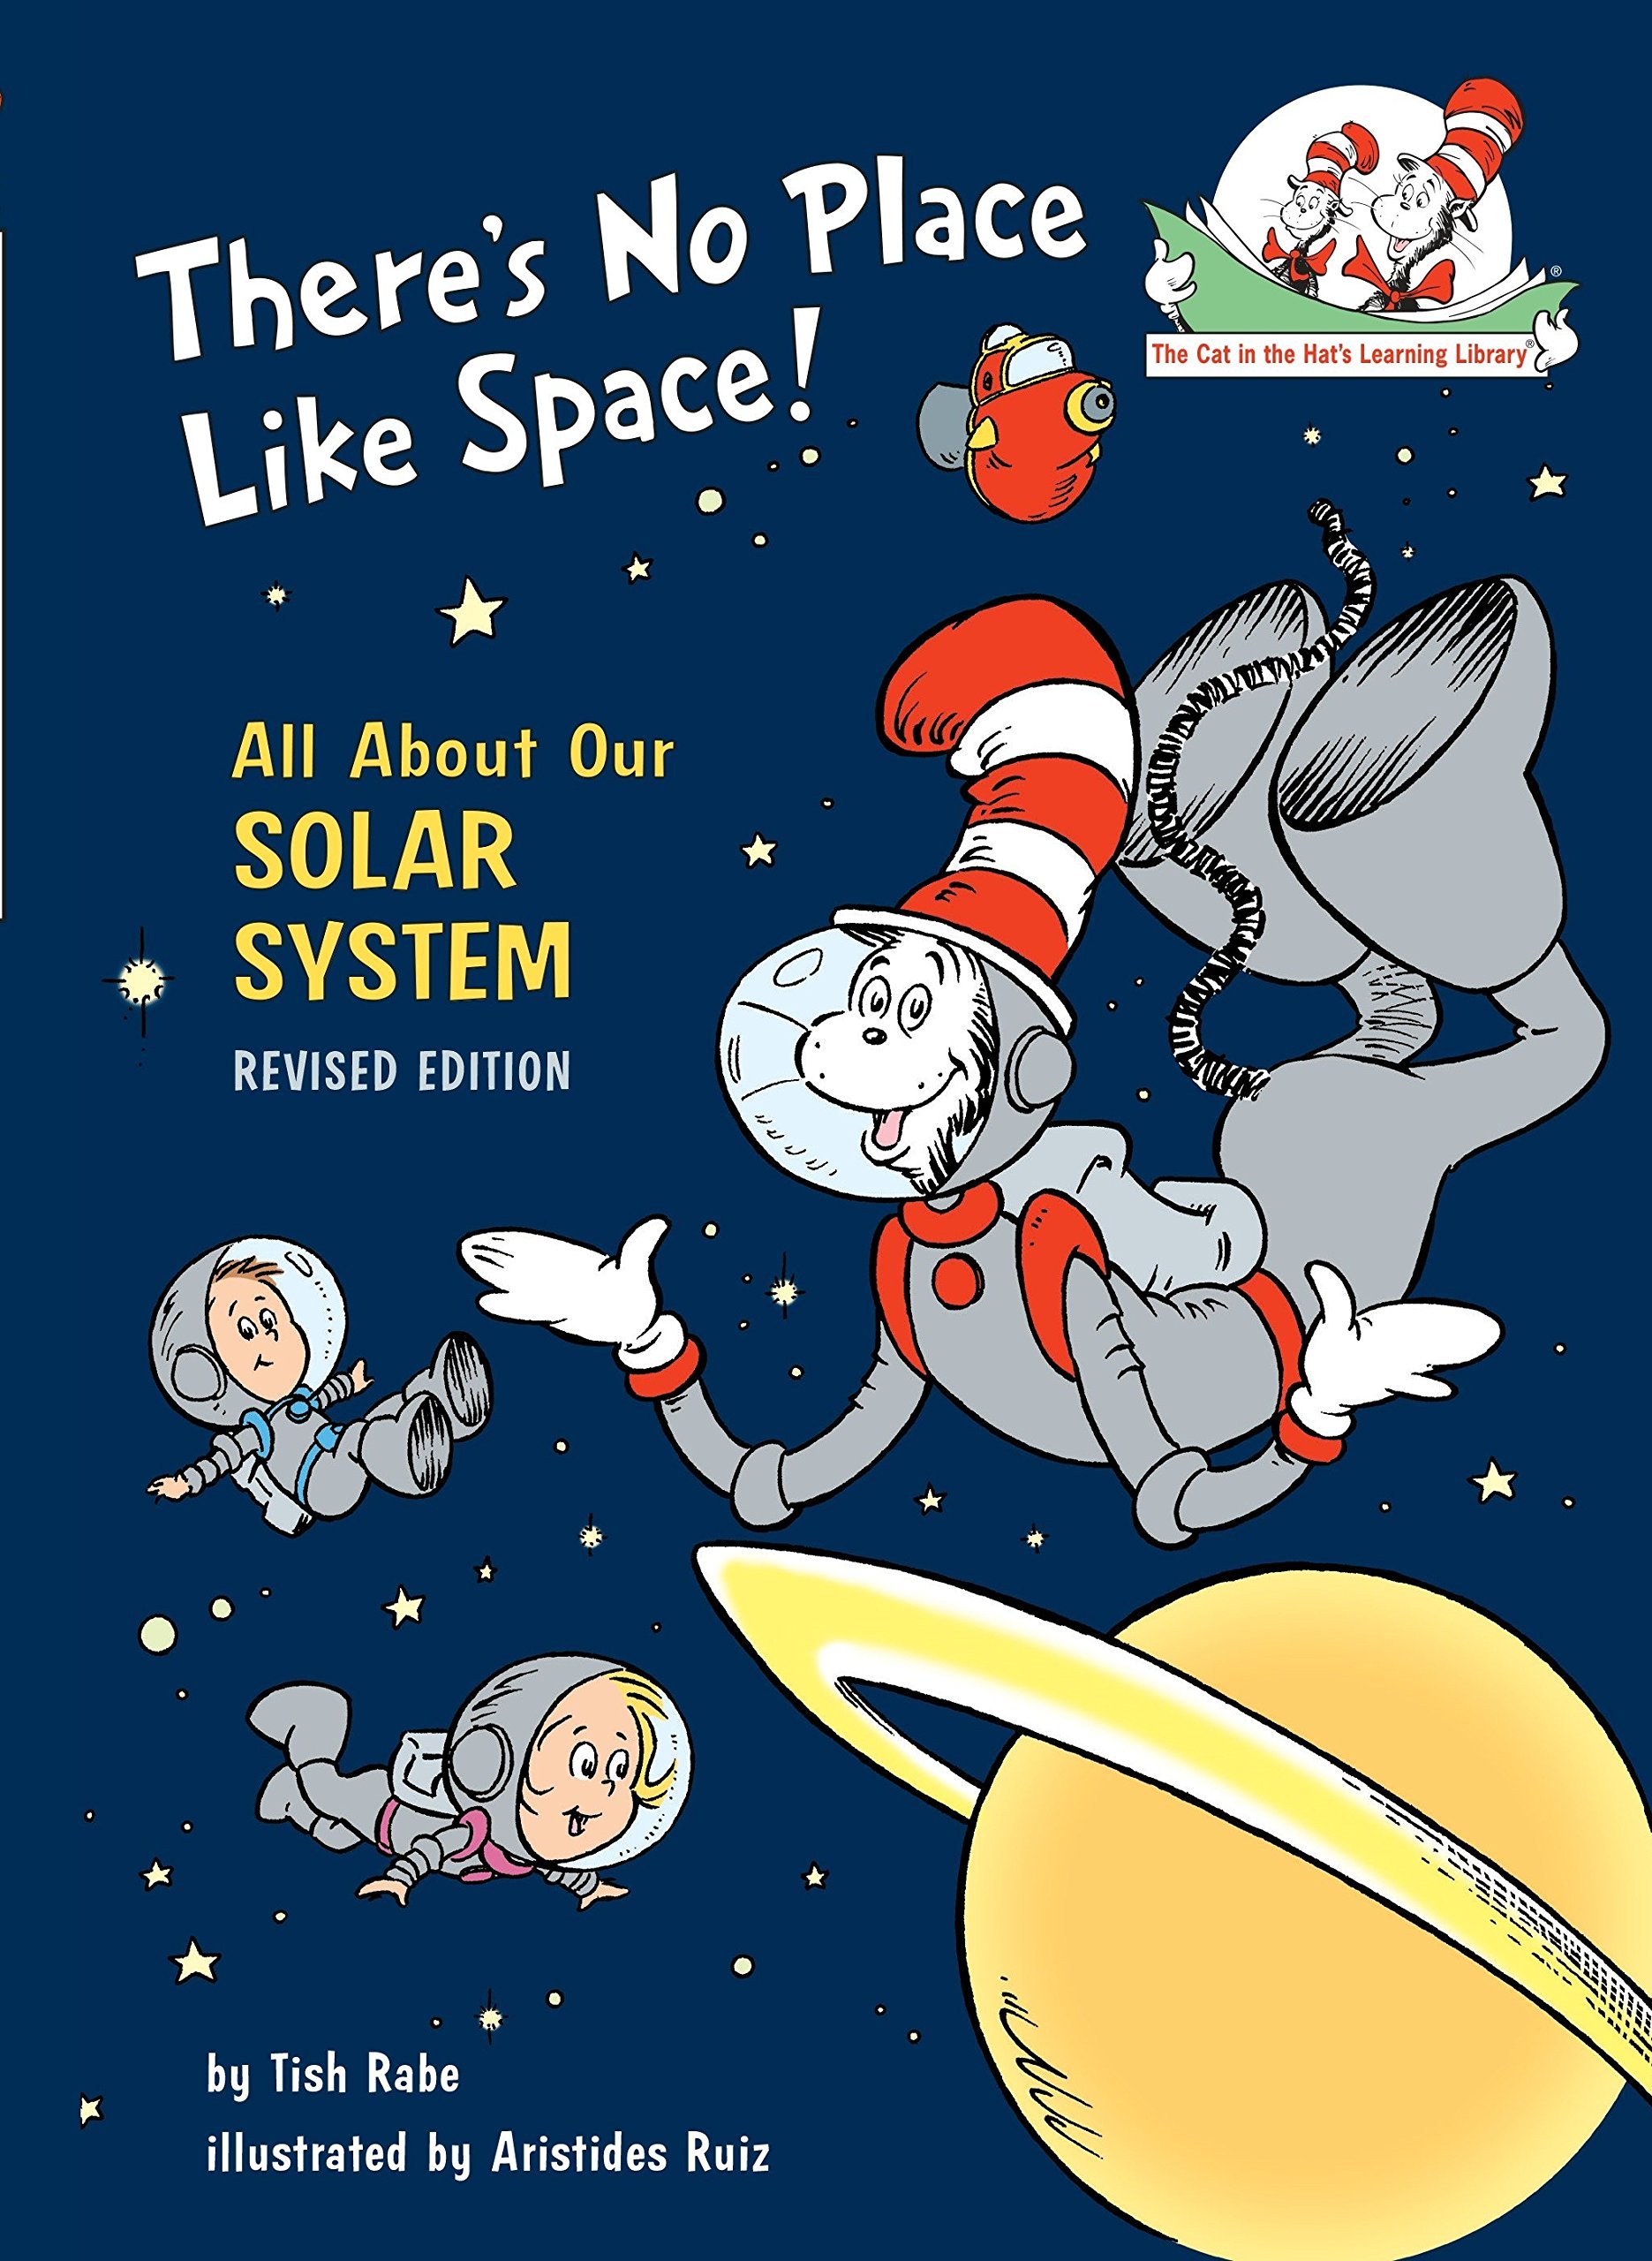 Baby Books for the Planetarium